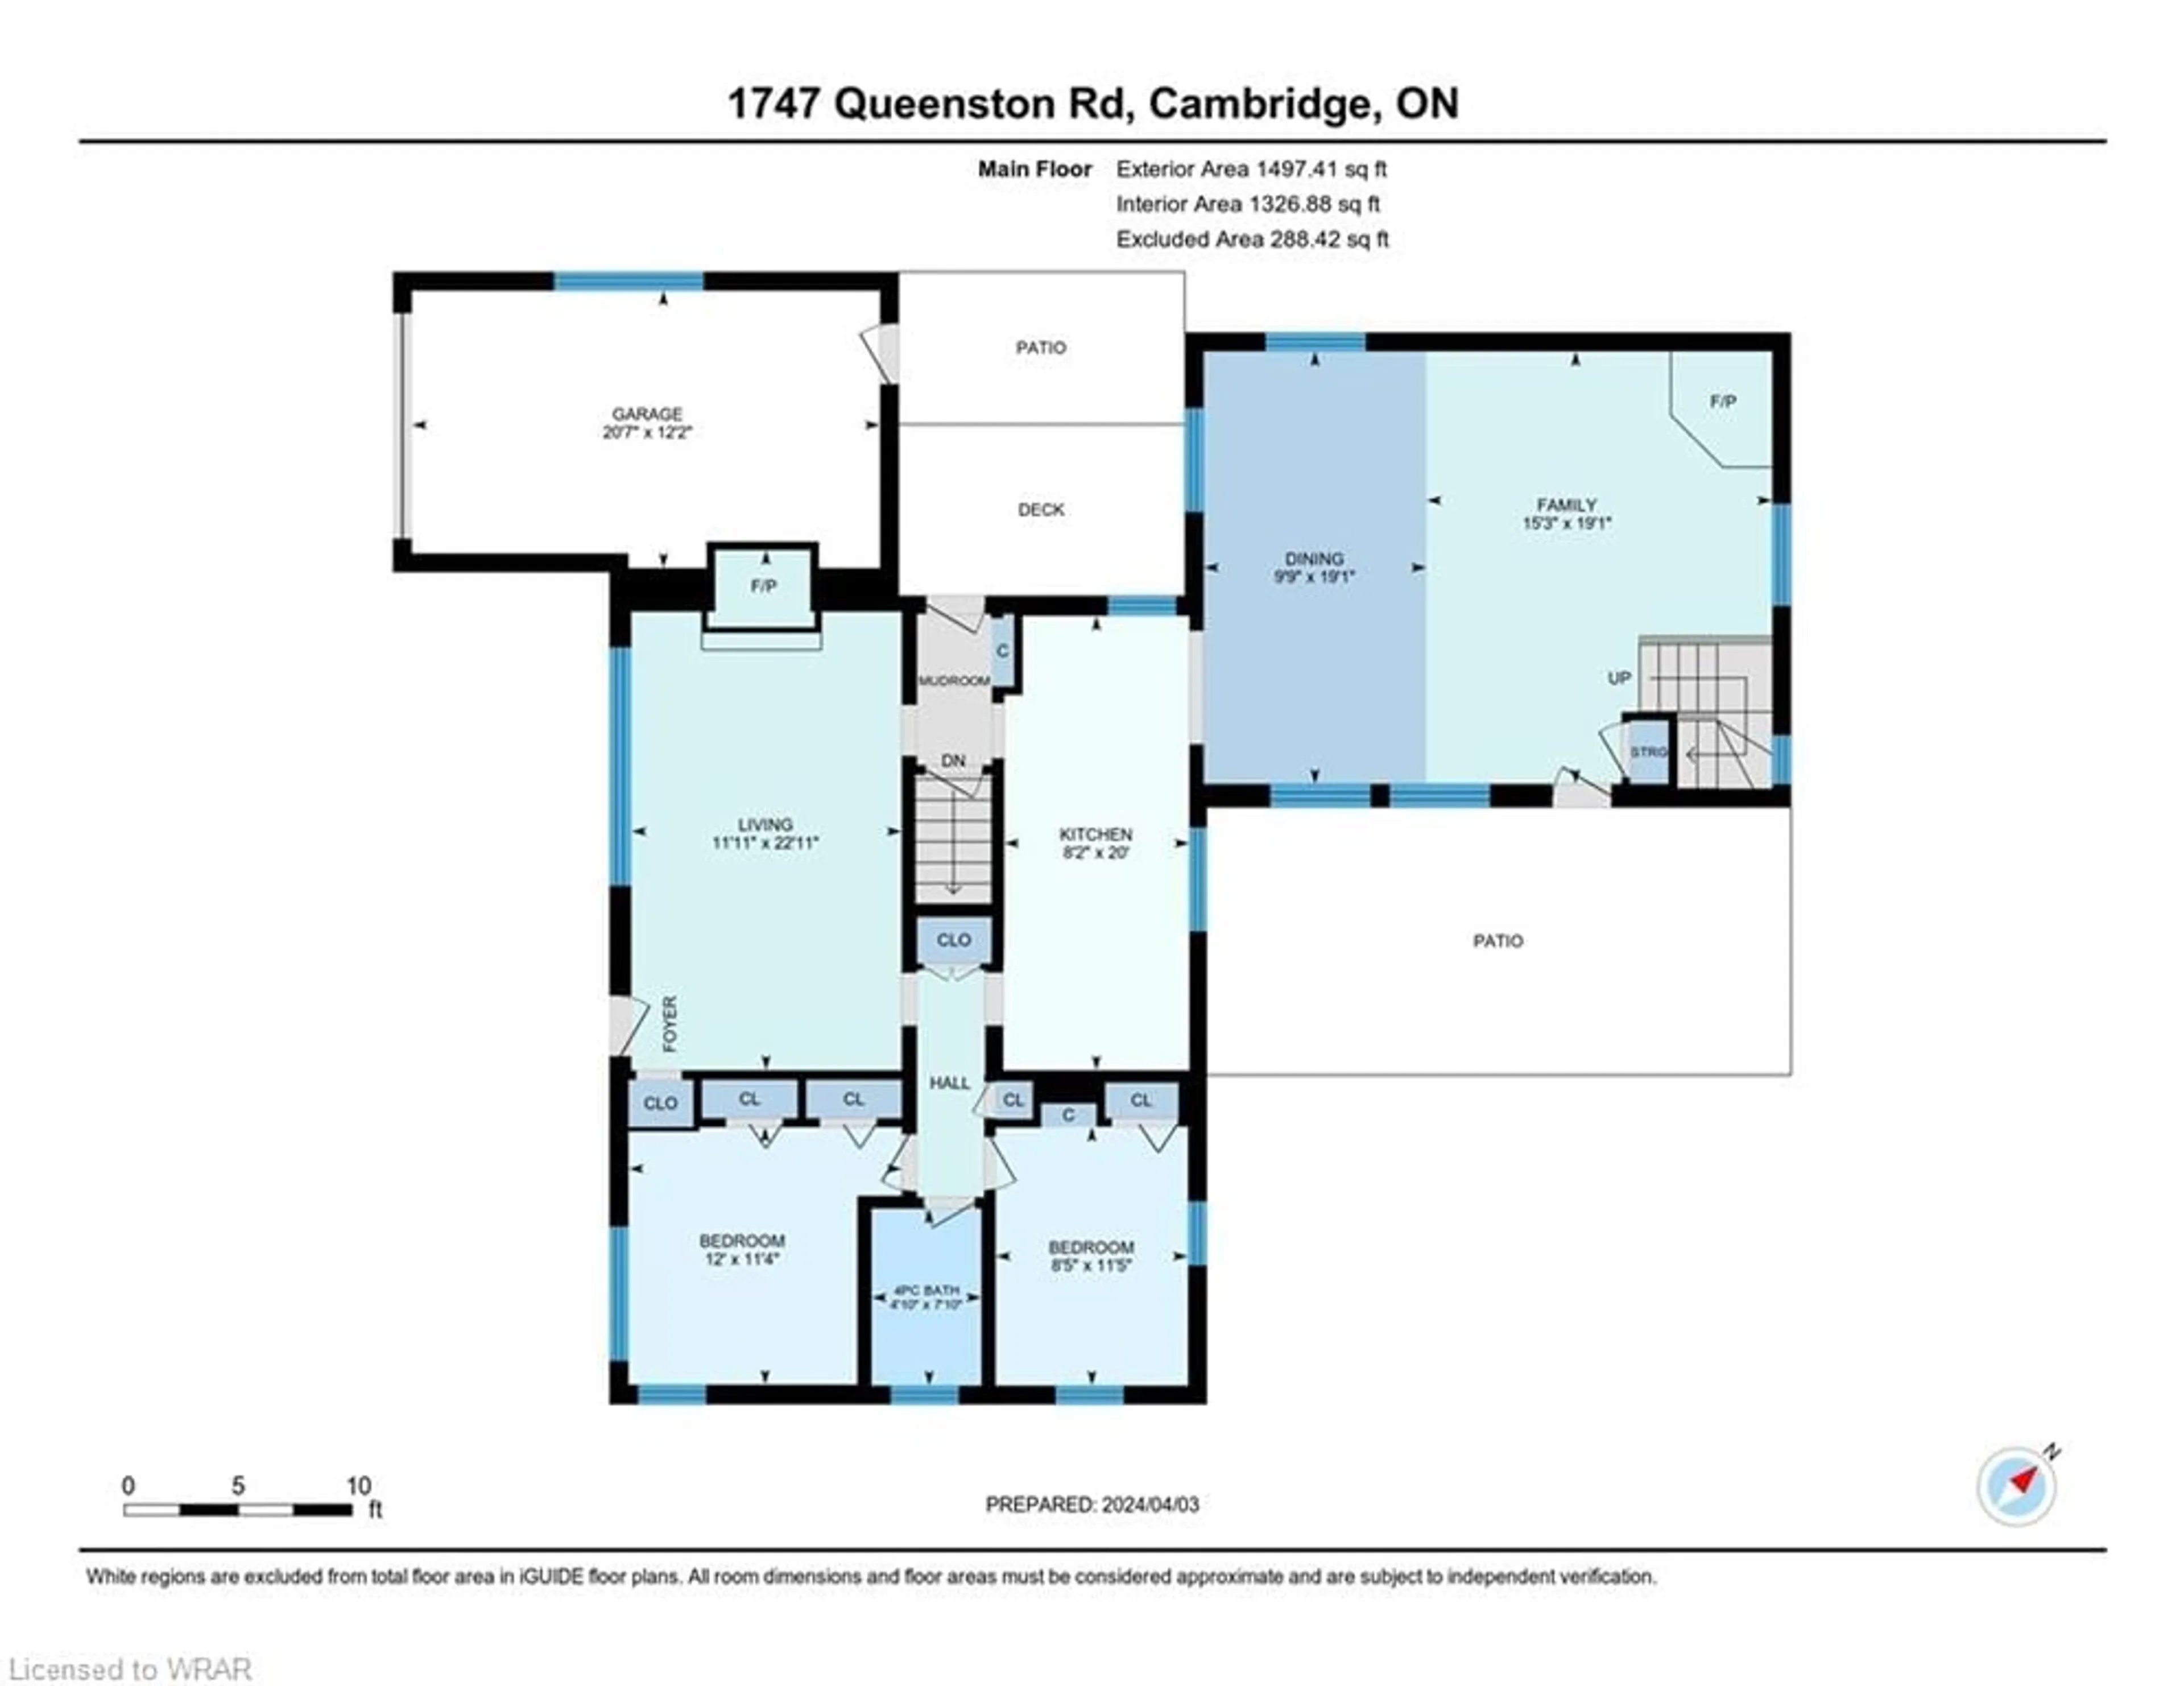 Floor plan for 1747 Queenston Rd, Cambridge Ontario N3H 3M3